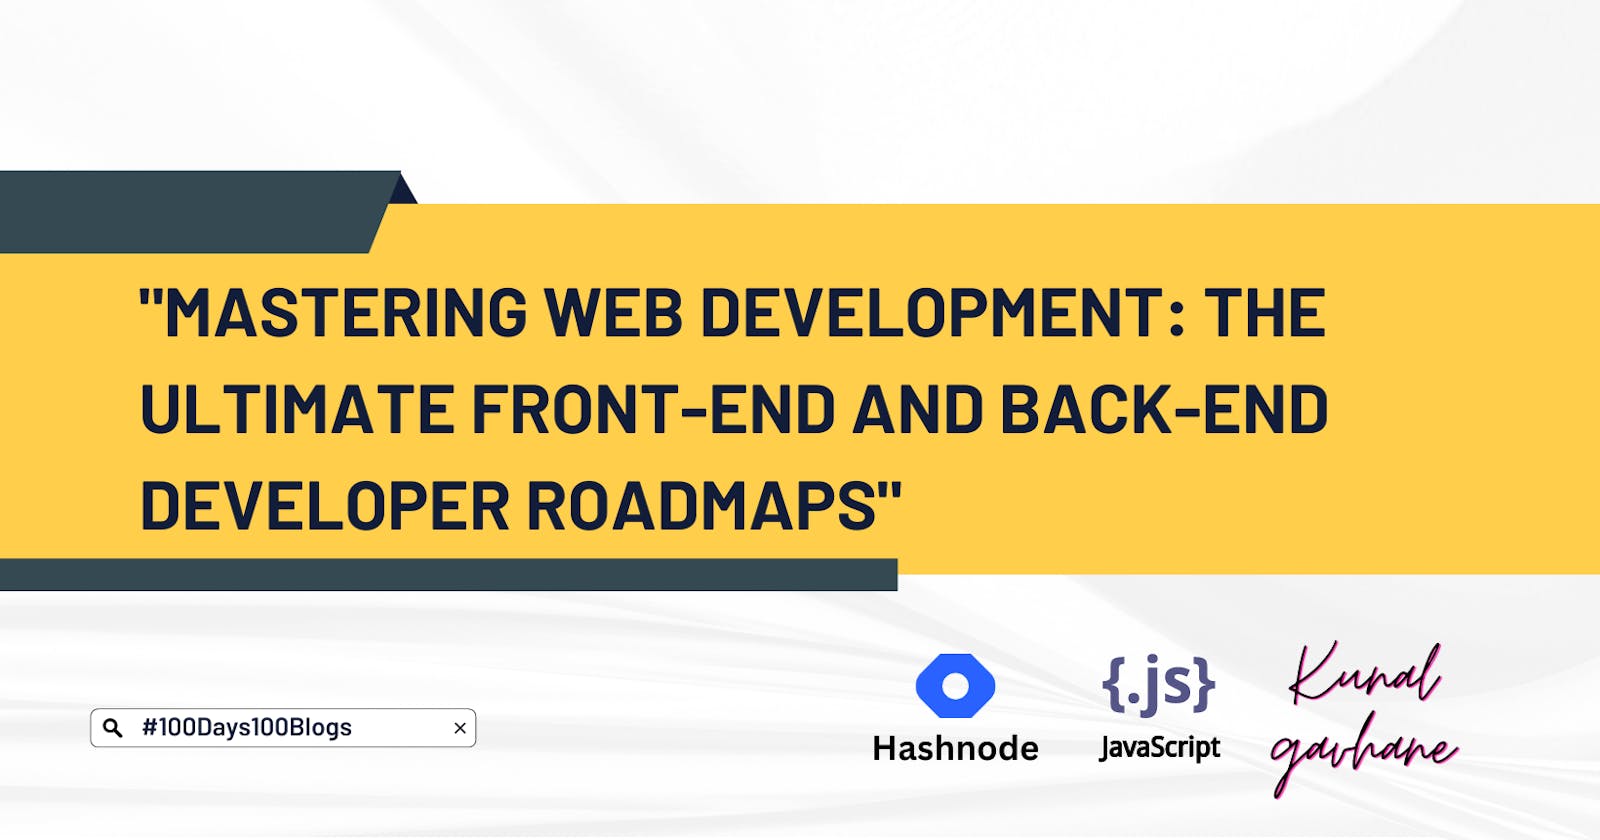 Mastering Web Development: The Ultimate Front-end and Back-end Developer Roadmaps.